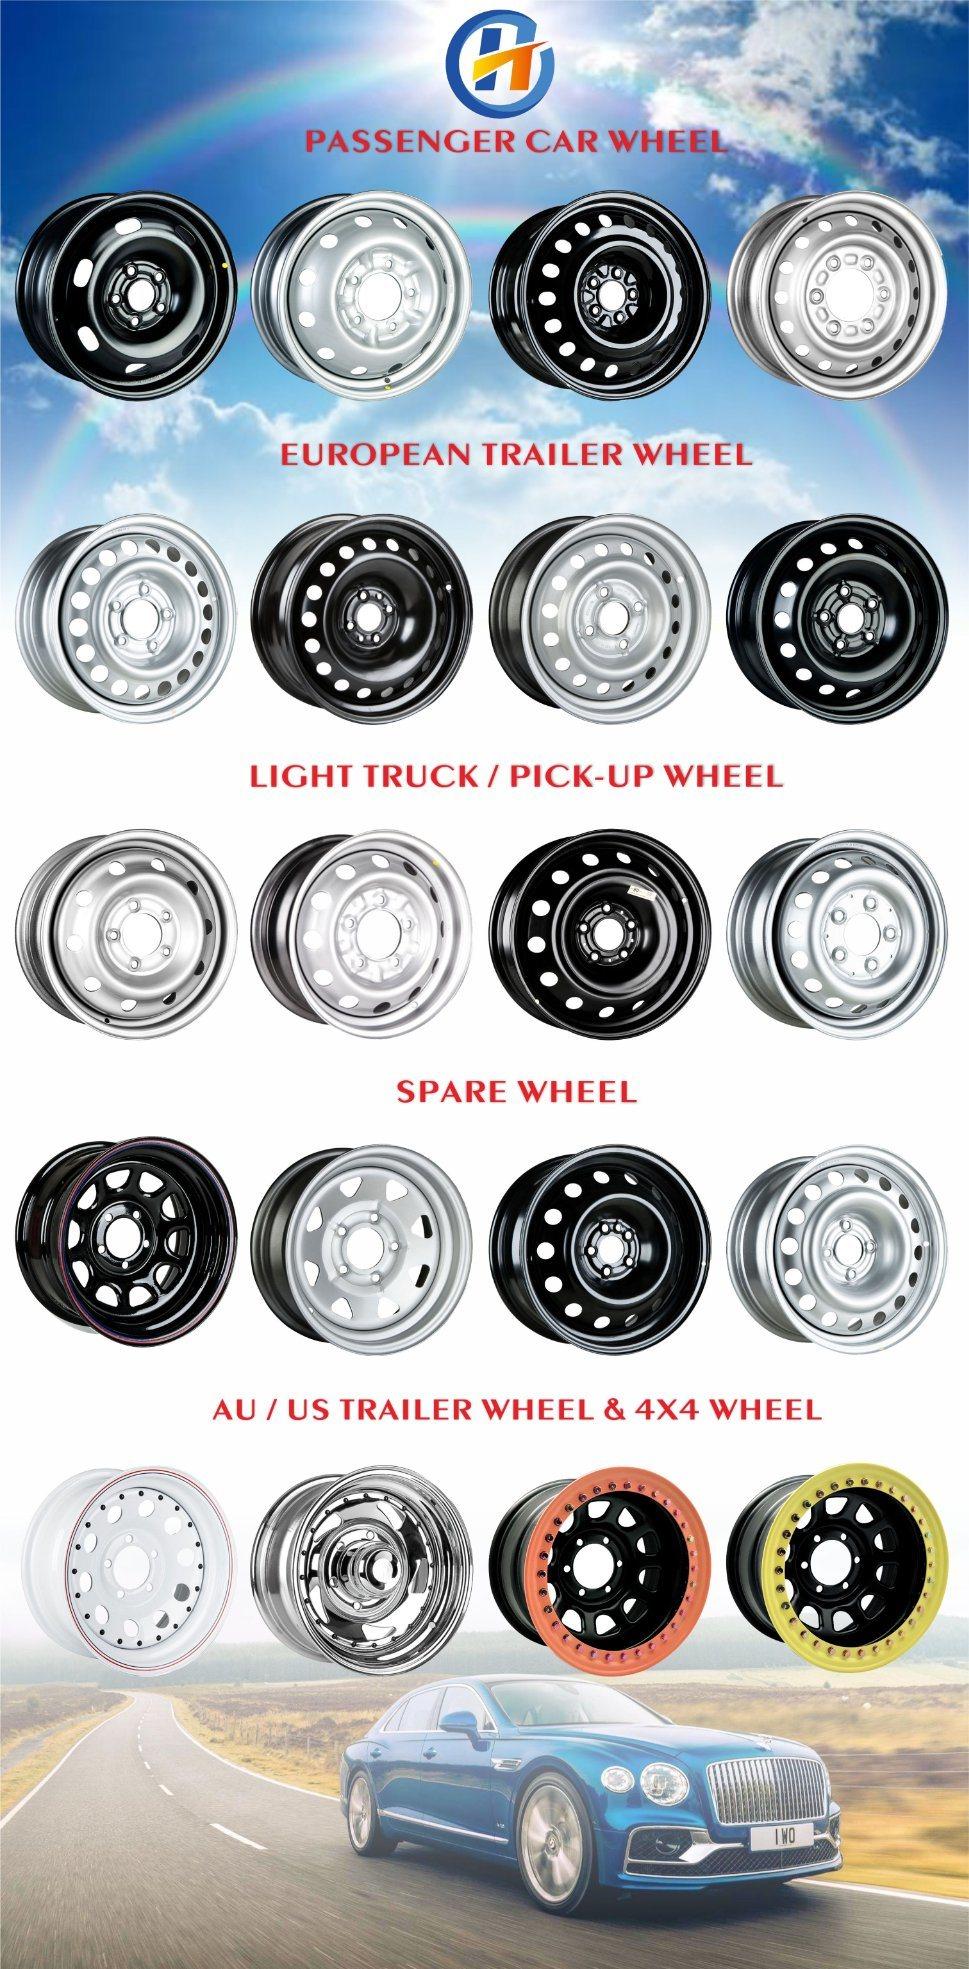 H&T Wheel 564203 High Performance Black E-Coating 15 Inch 15X6.0 4X100 Steel Wheel Rim